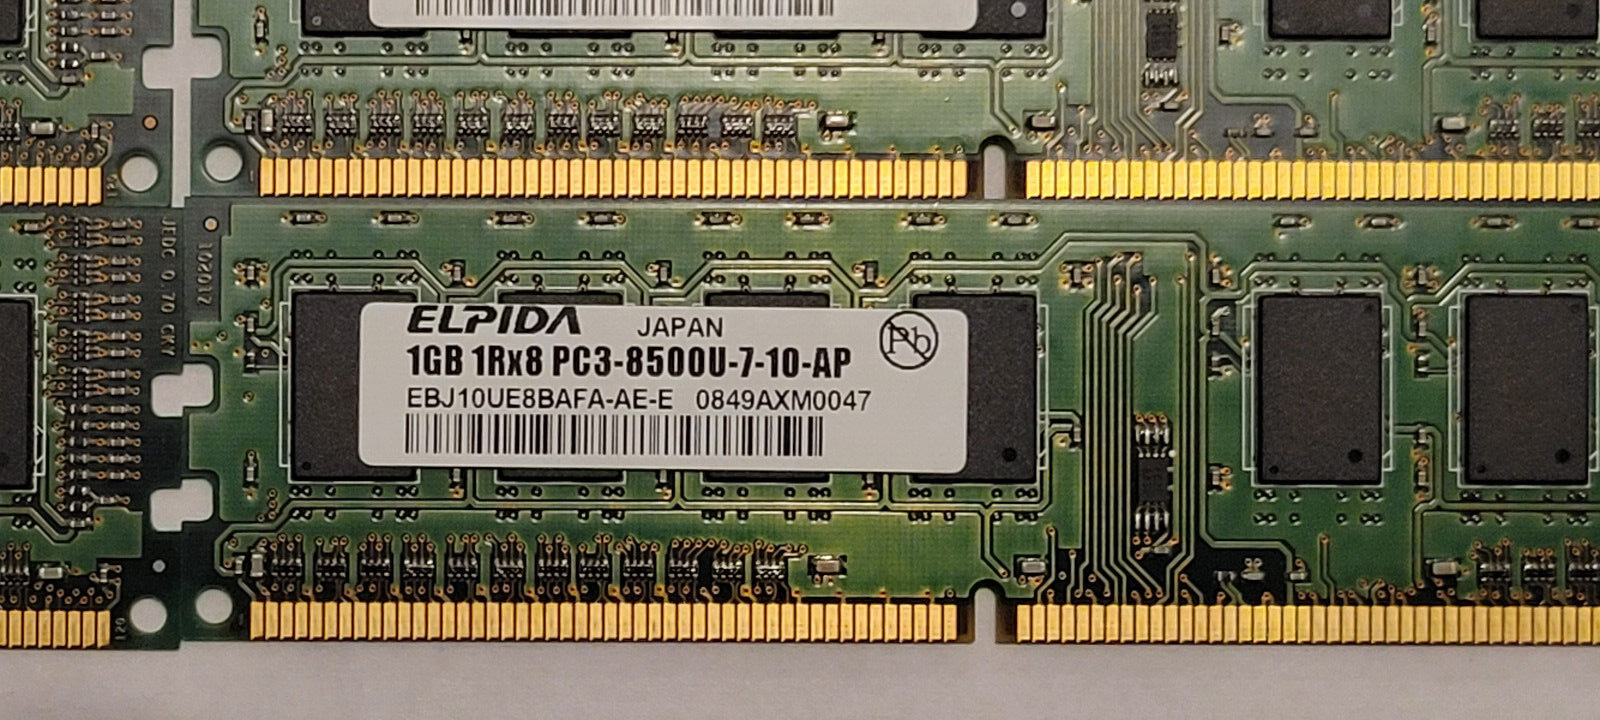 6x1GB  ELPIDA 1GB 1Rx8 PC3-8500U-7-10-AP Desktop Memory Stick EBJ10UE8BAFA-AE-E